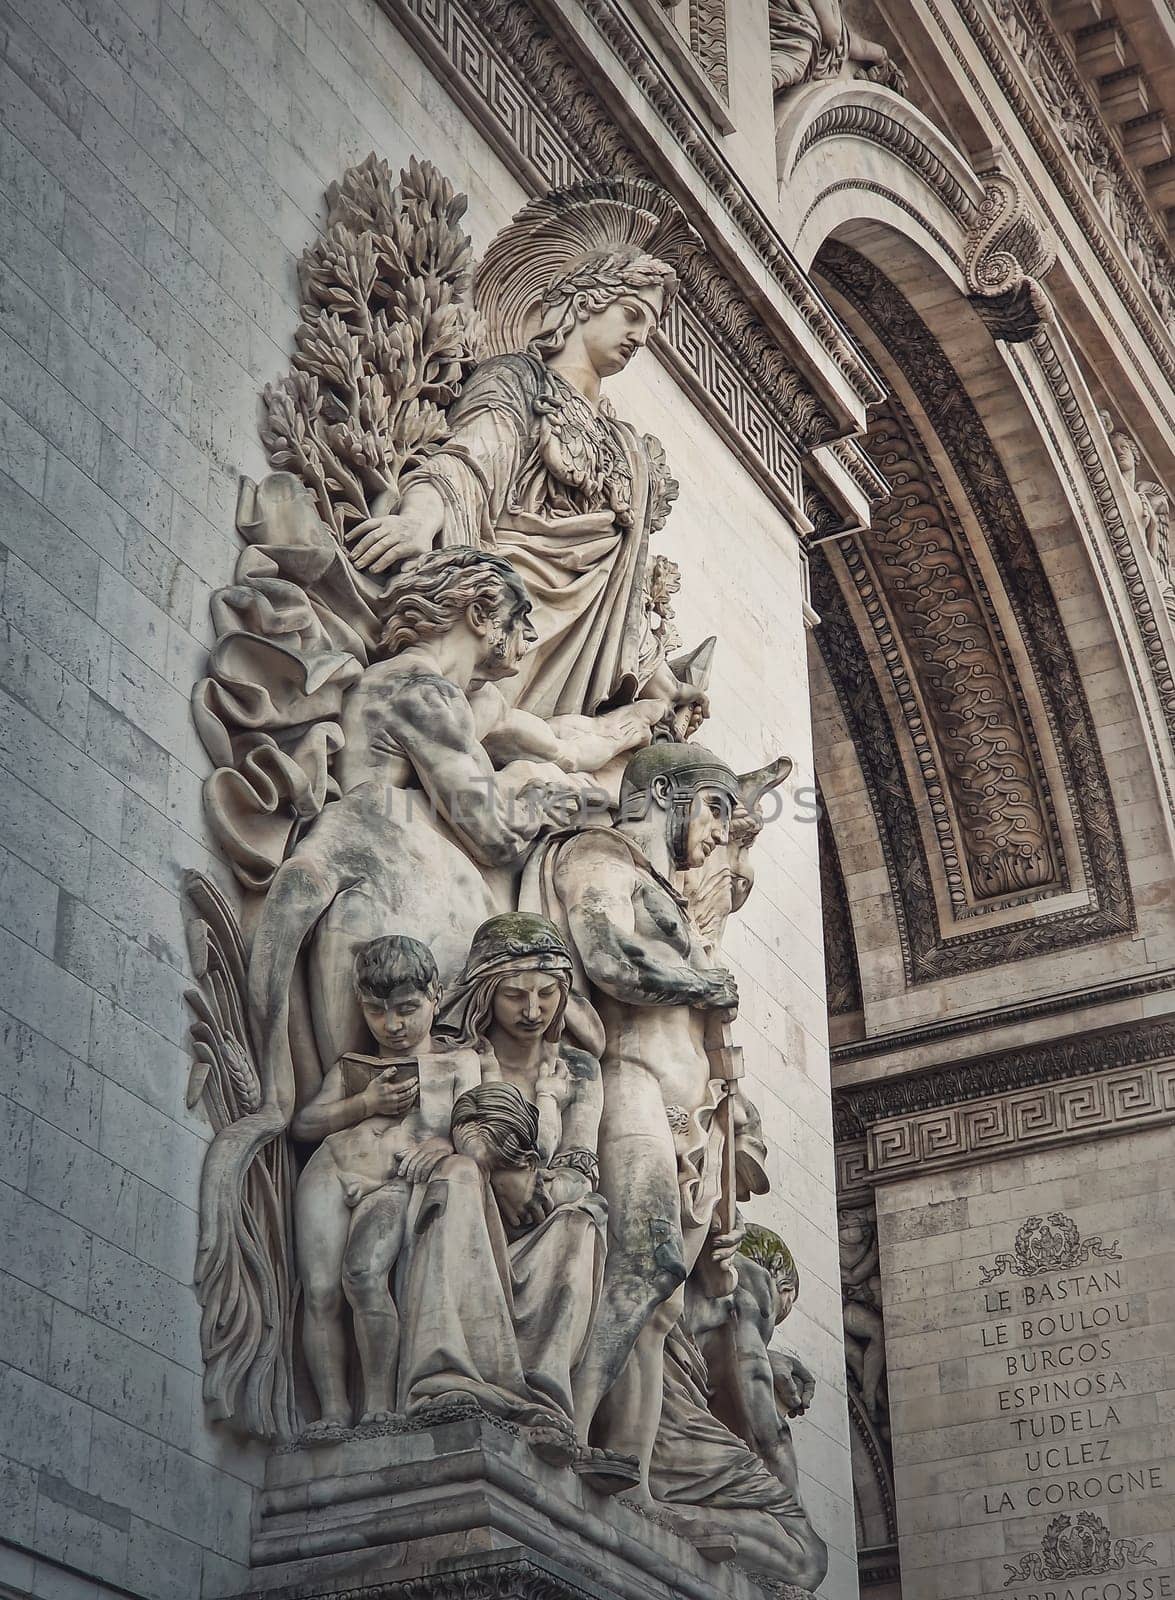 Closeup architectural details of the triumphal Arch, Paris, France. The peace statue (La Paix de 1815) adorns a pillar of the Arc de Triomphe with goddess of victory Minerva by psychoshadow